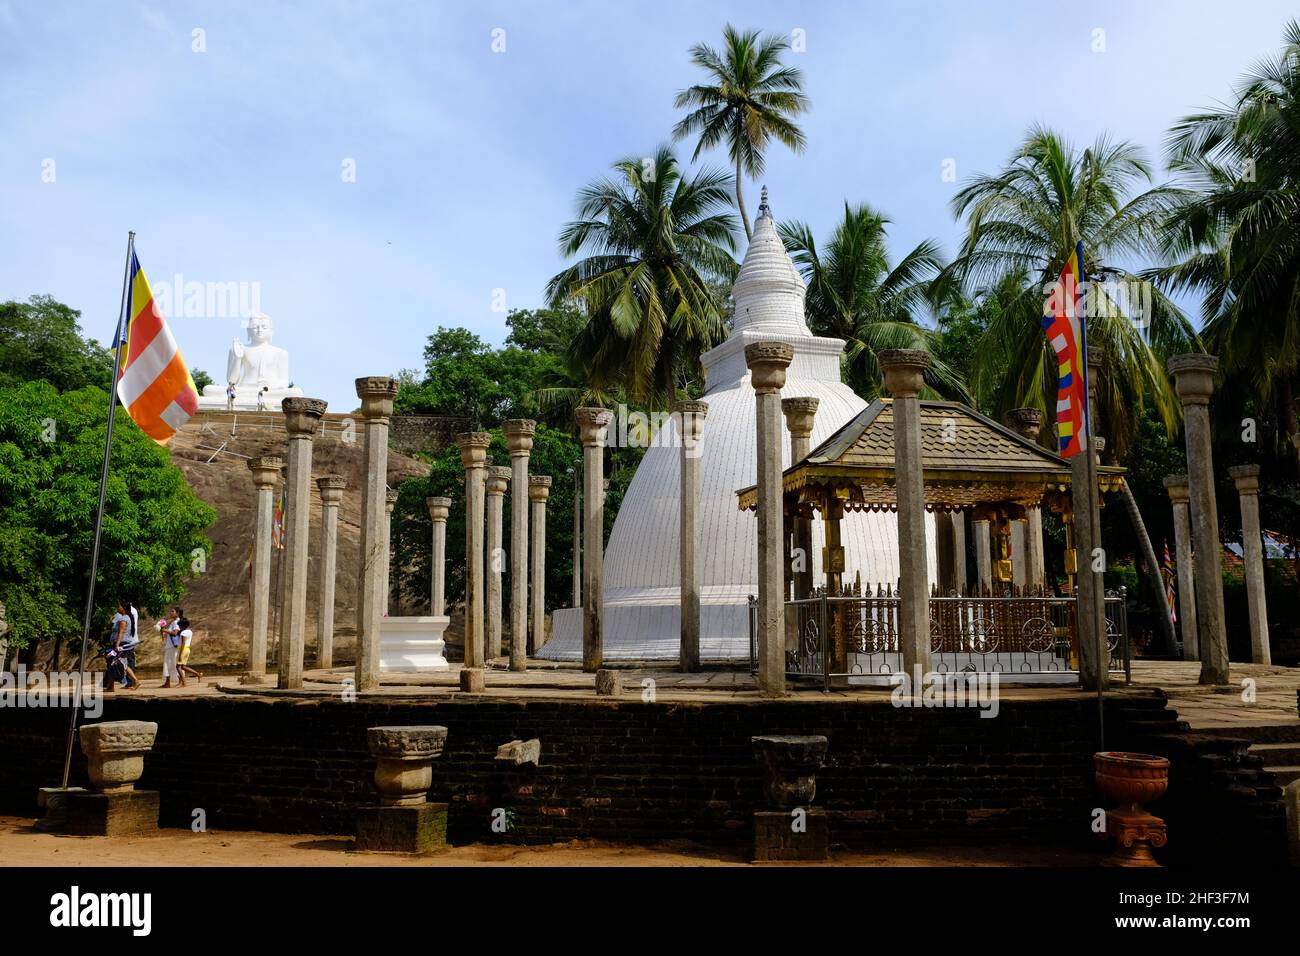 Sri Lanka Mihintale - Ambasthala Dagaba - Stupa surrounded with stone pillars Stock Photo